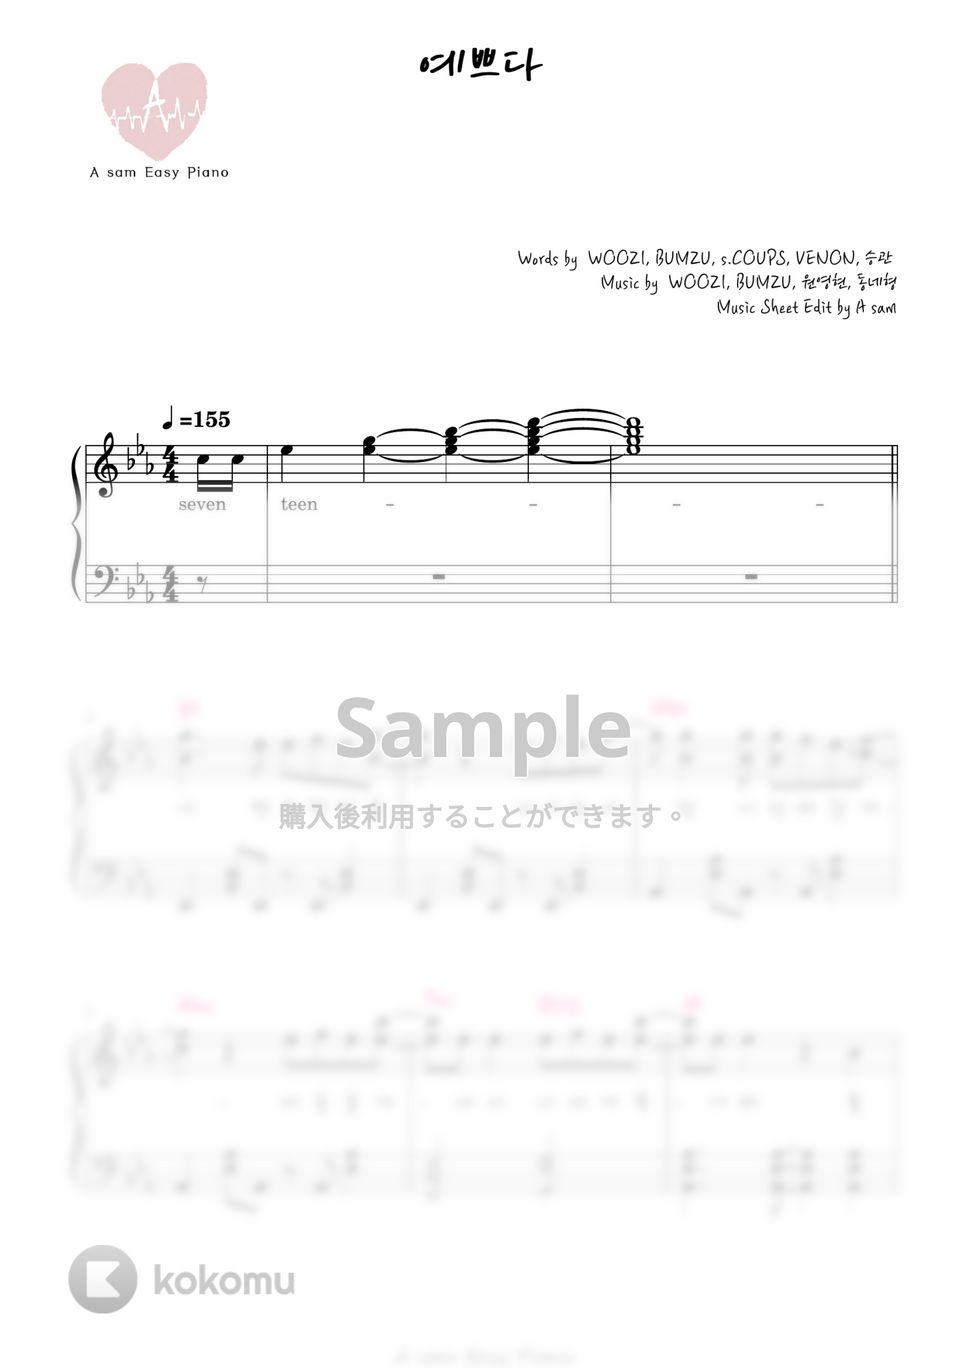 SEVENTEEN - 예쁘다(Pretty U) (ピアノ両手 / 中級 / 韓国語歌詞付き) by A-sam